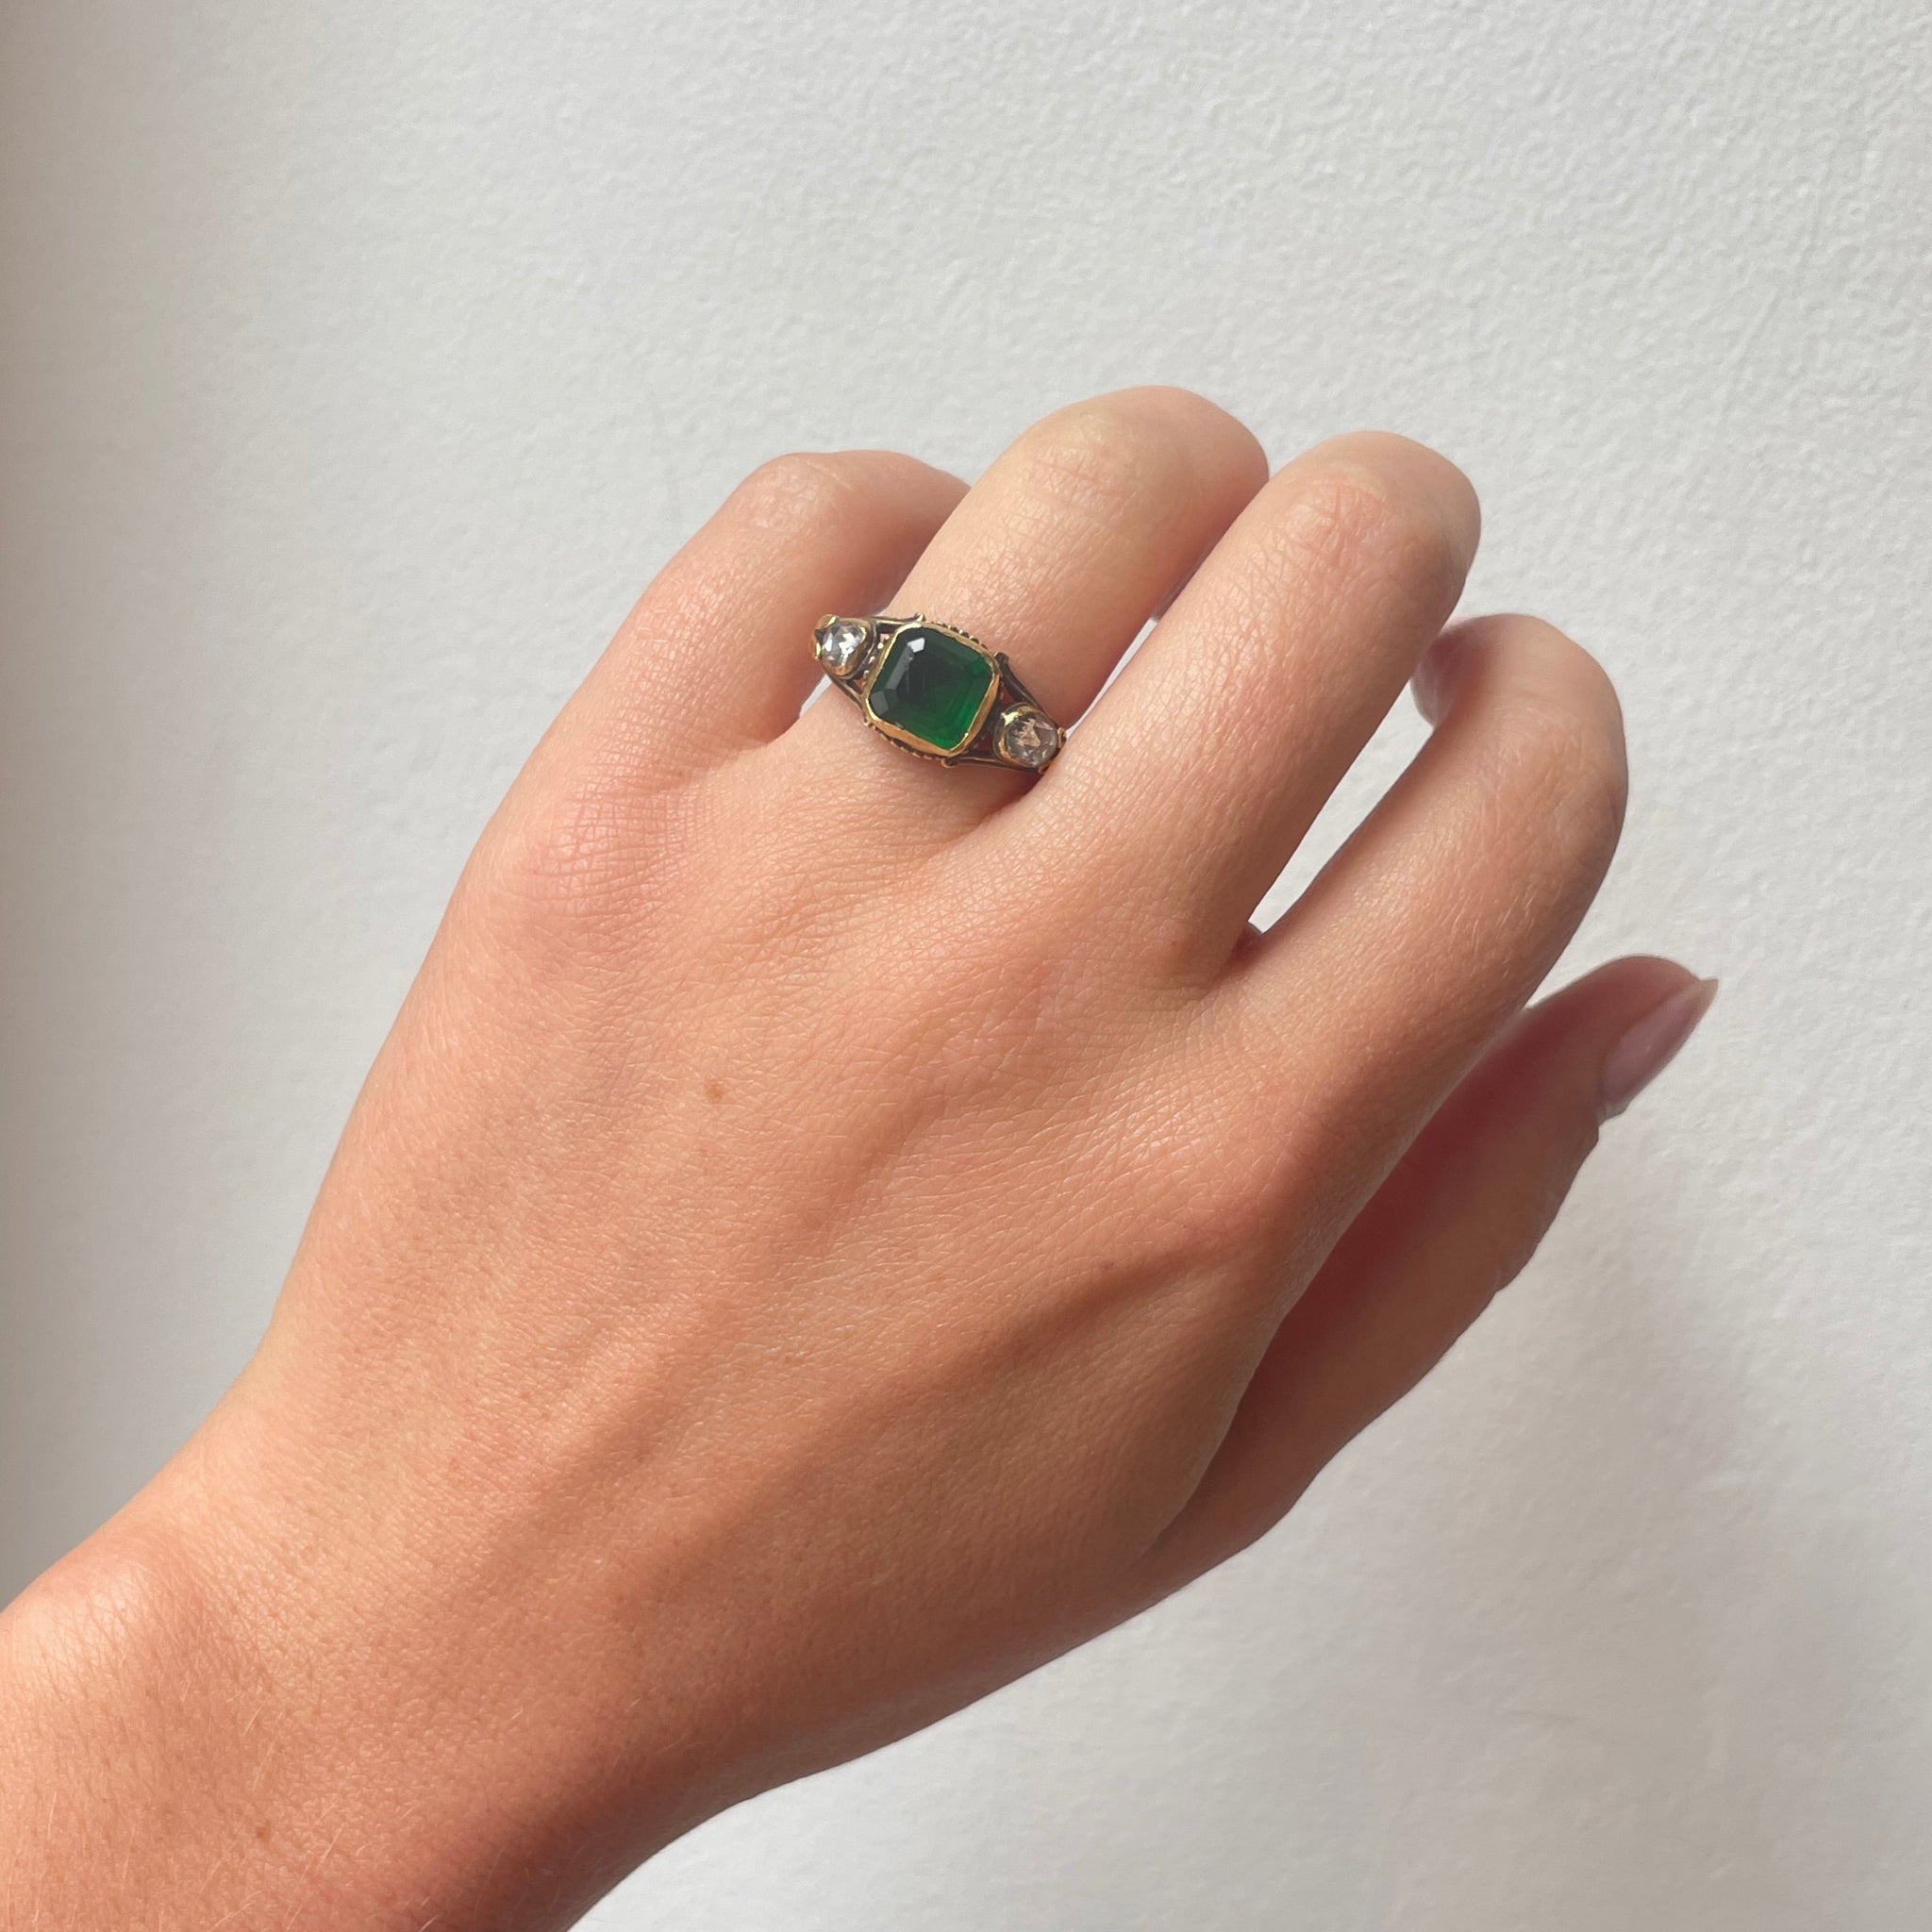 Georgian Green Paste and Diamond Ring